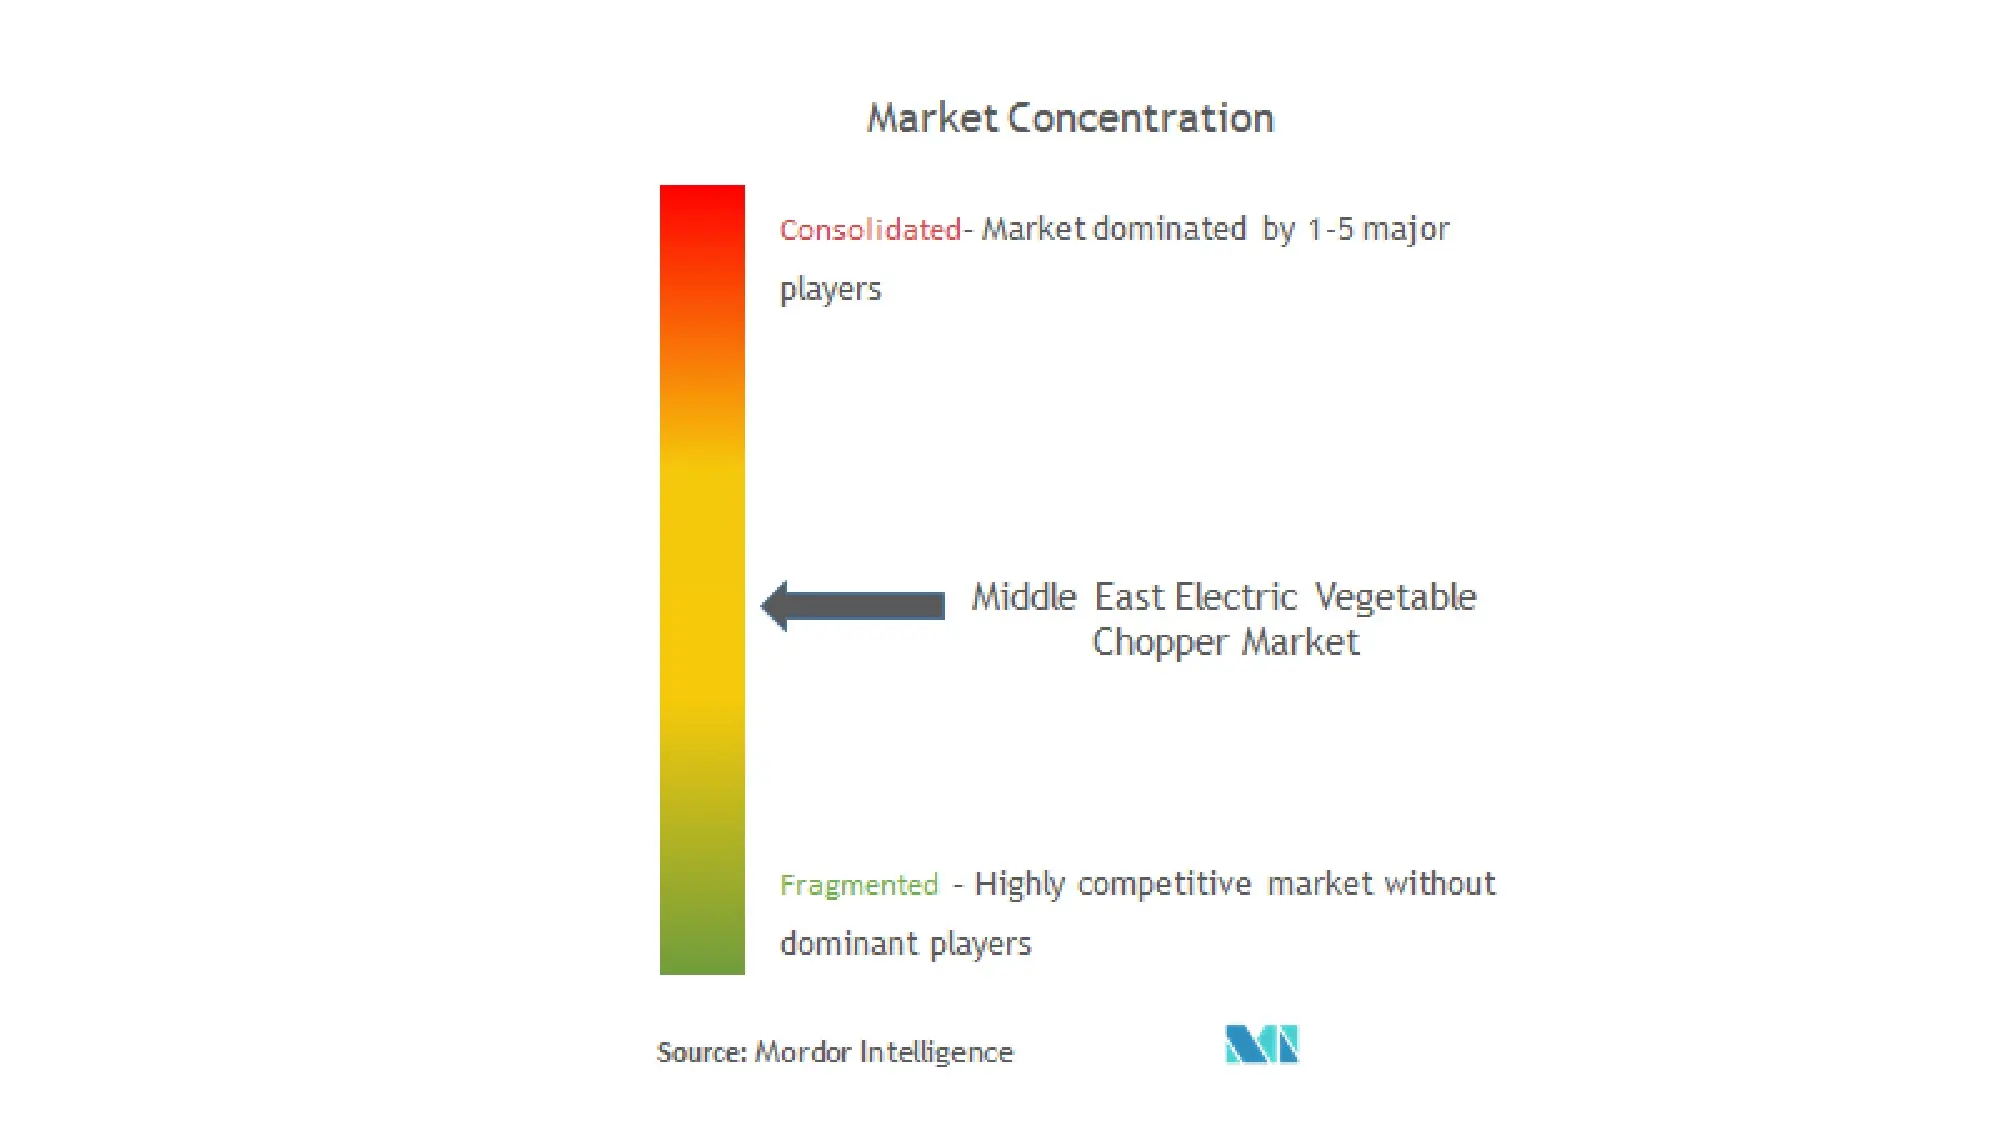 Middle East Electric Vegetable Chopper Market Concentration